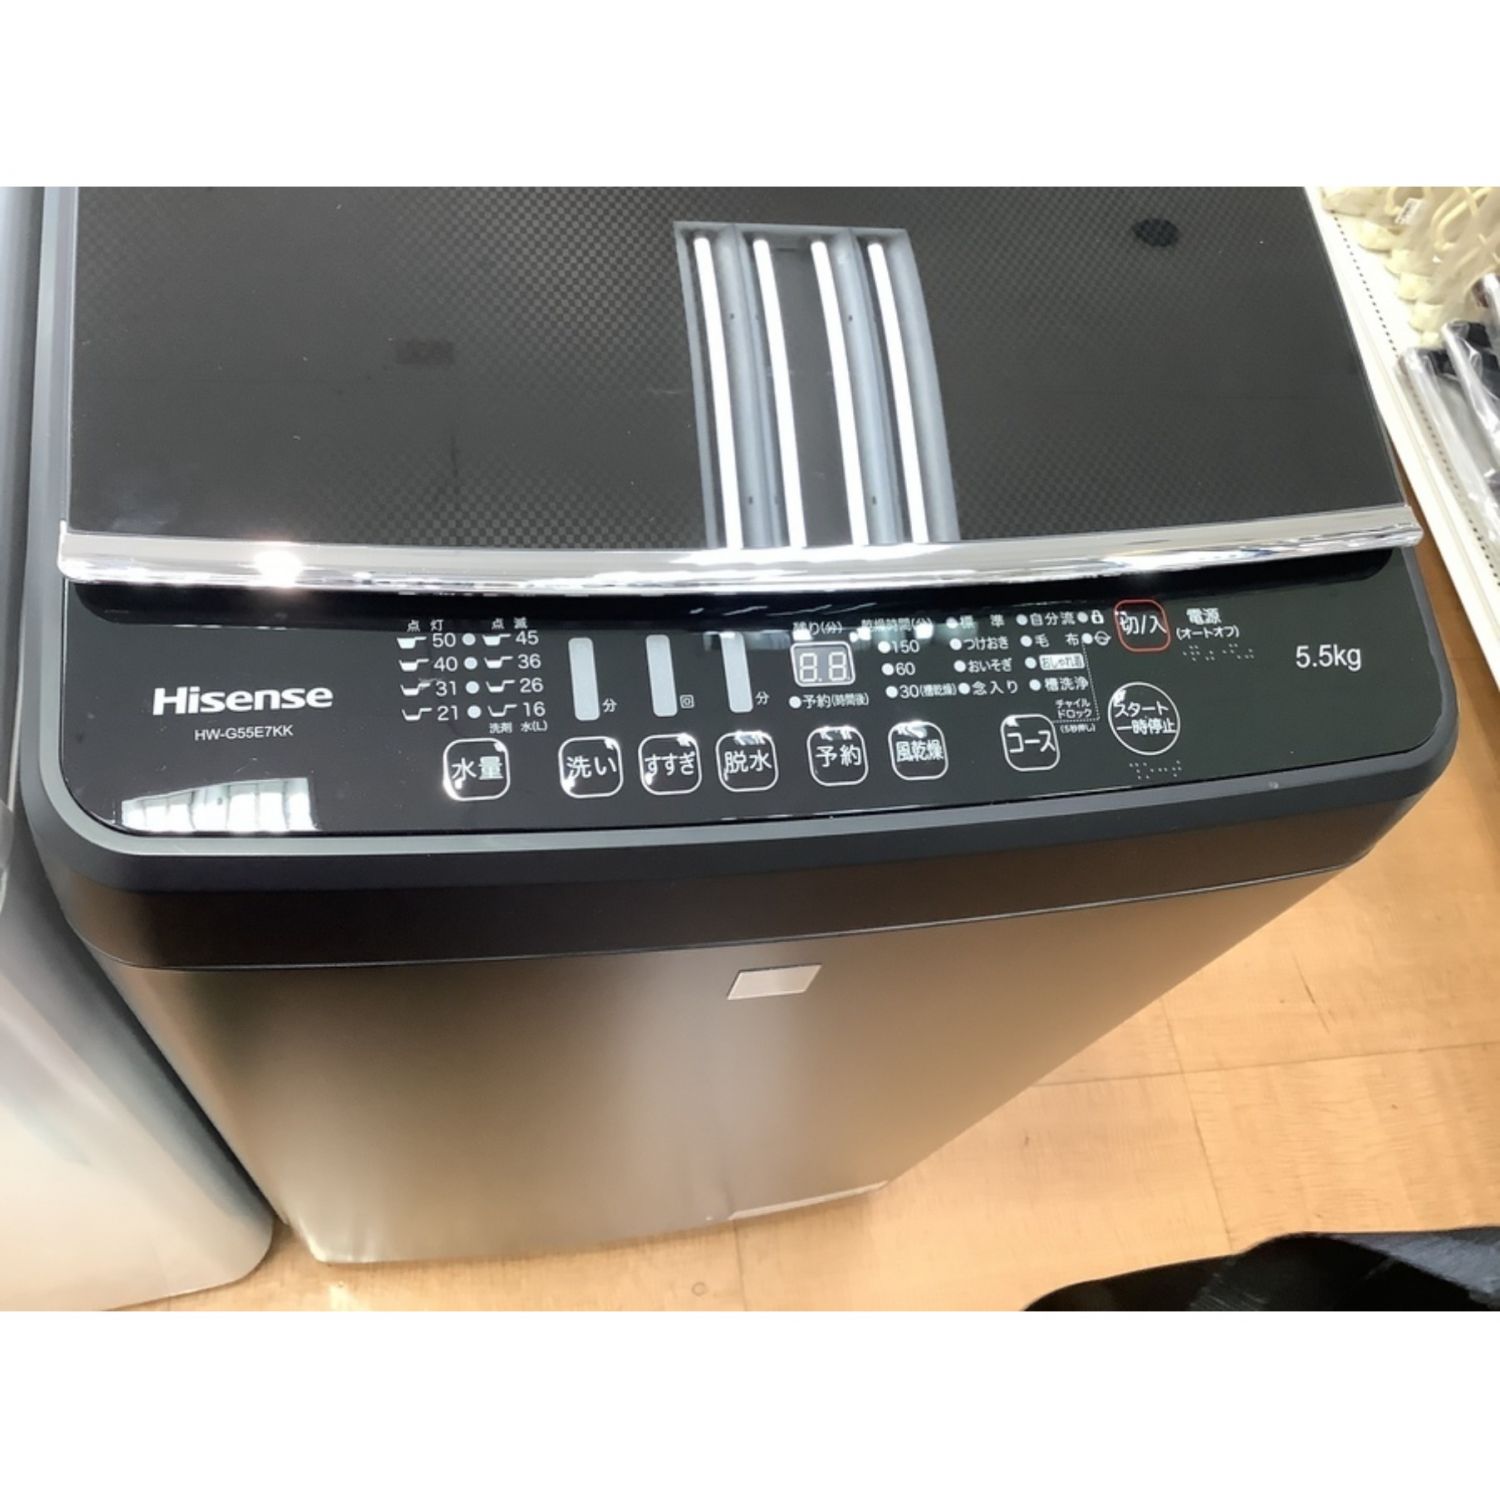 Hisense ハイセンス 洗濯機 HW-G55E7KK 5.5kg 2021年 - 洗濯機